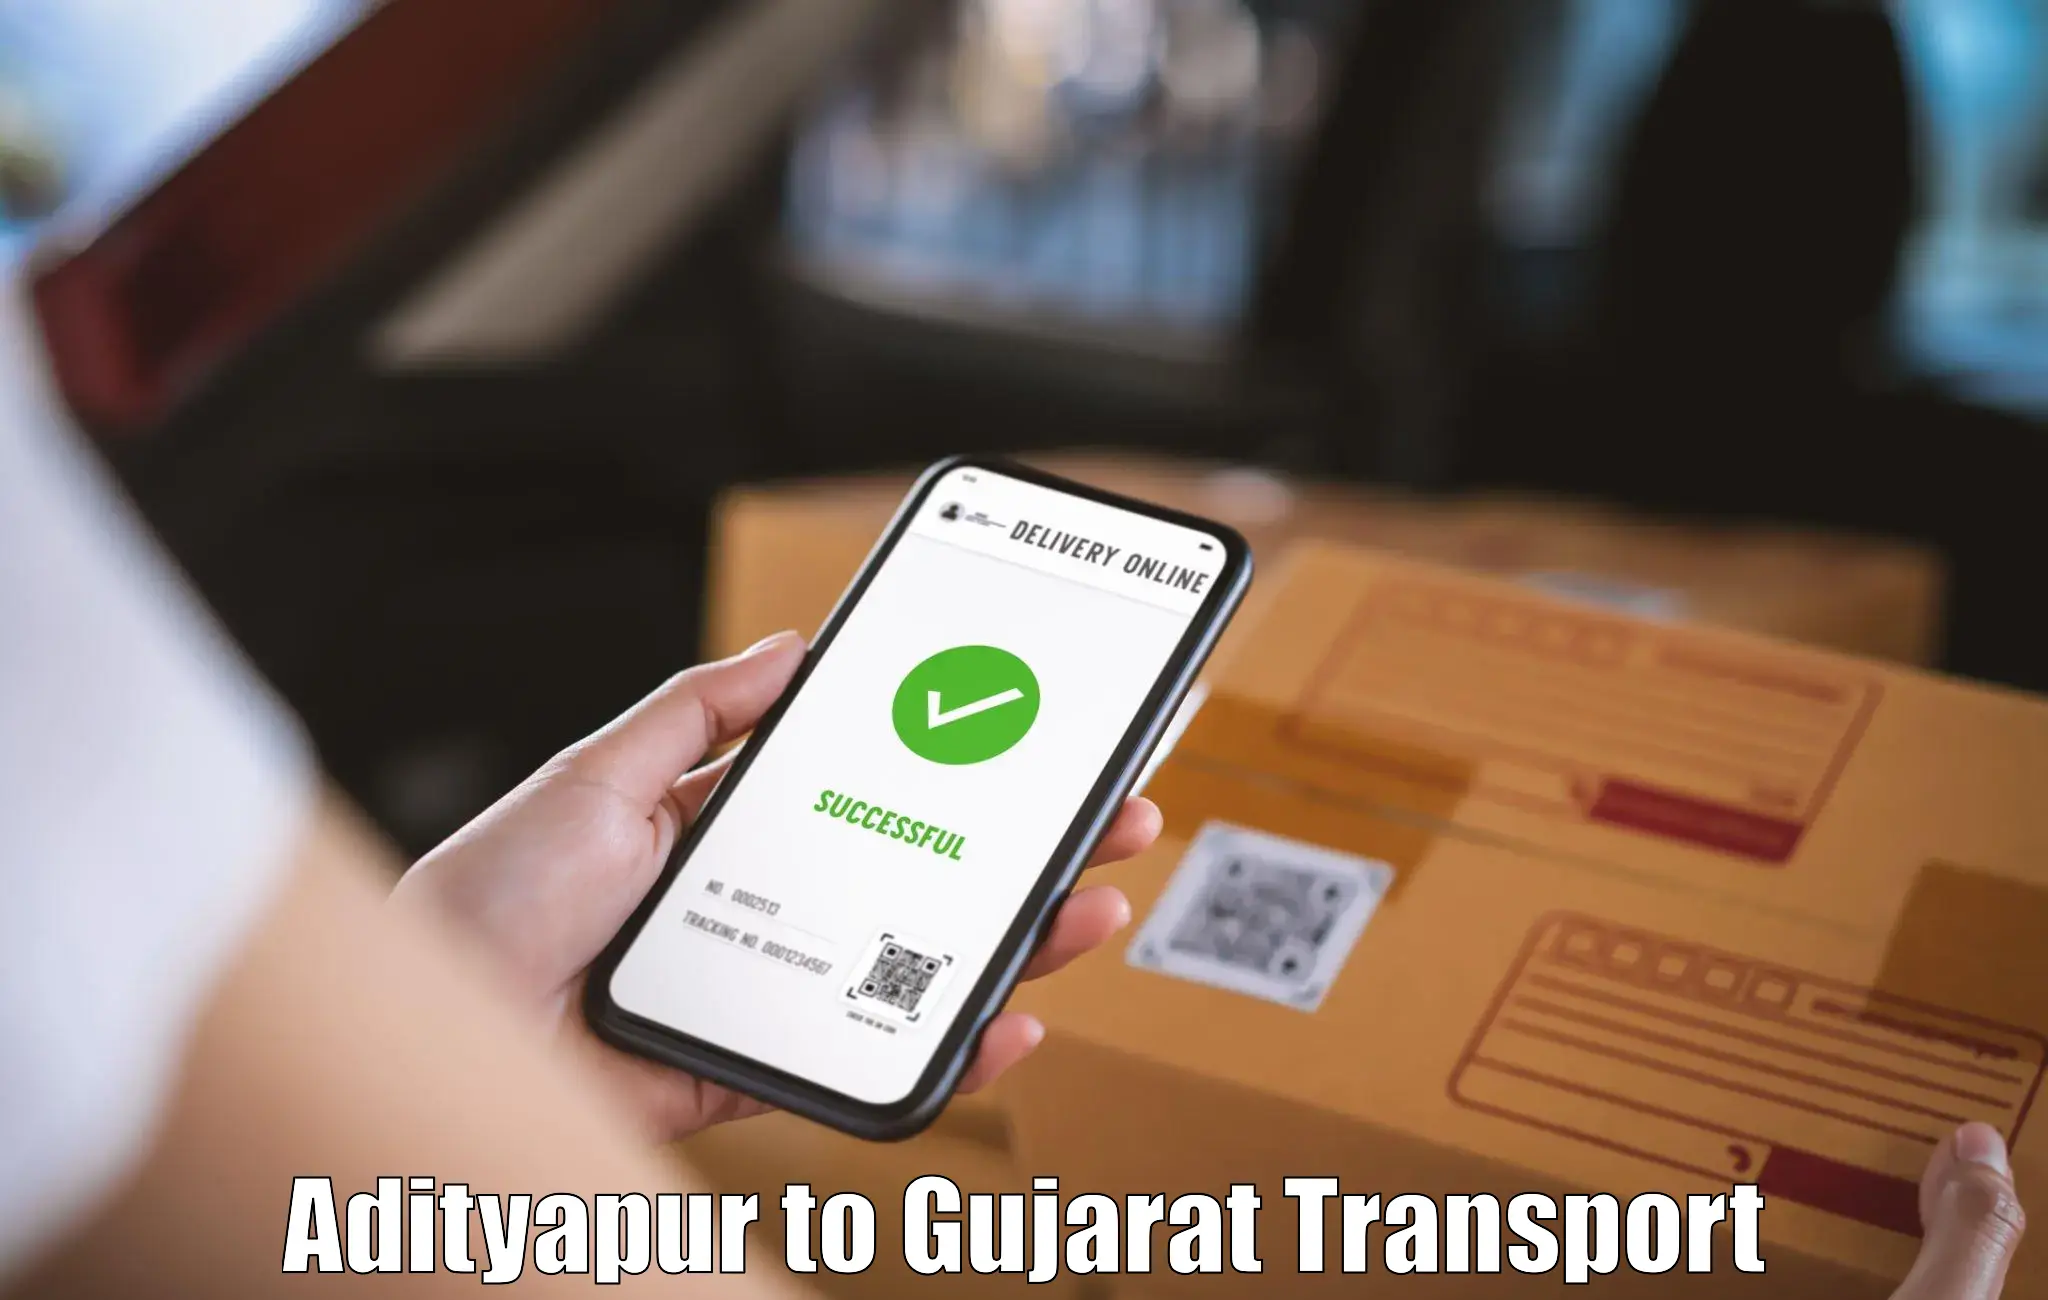 Transport in sharing Adityapur to Gujarat